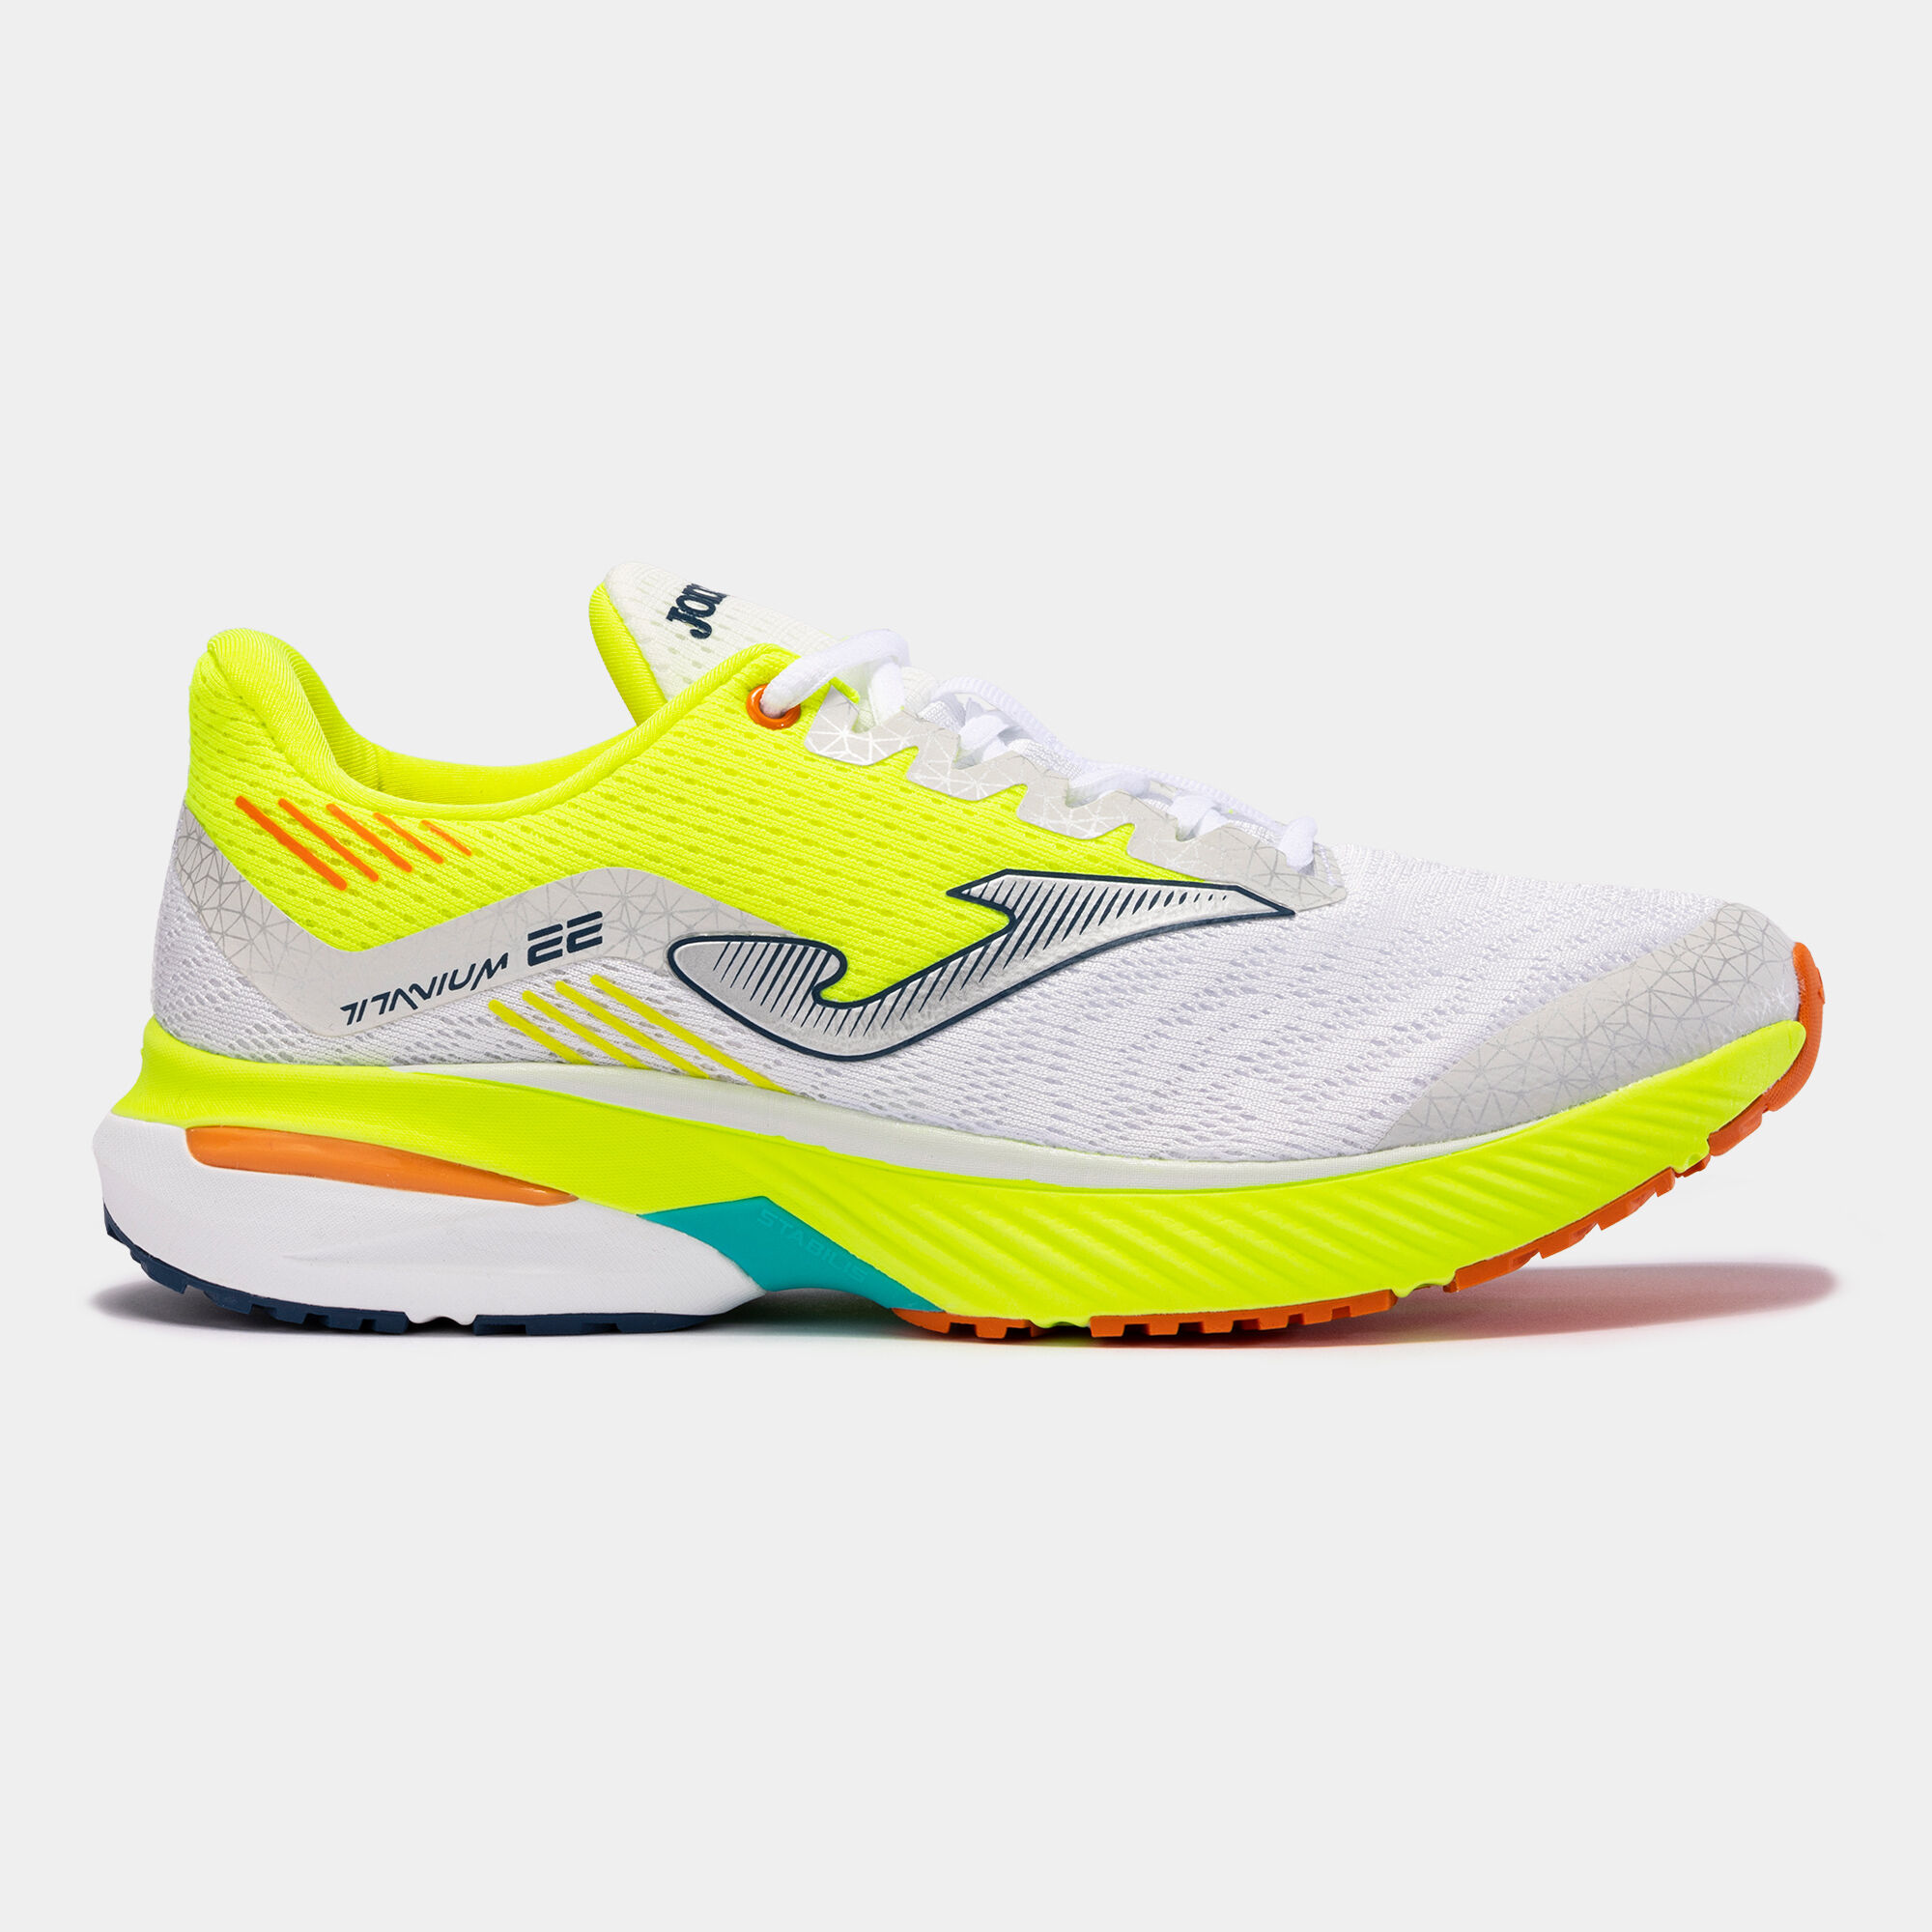 Pantofi sport alergare Titanium Men 23 bărbaȚi alb galben fosforescent